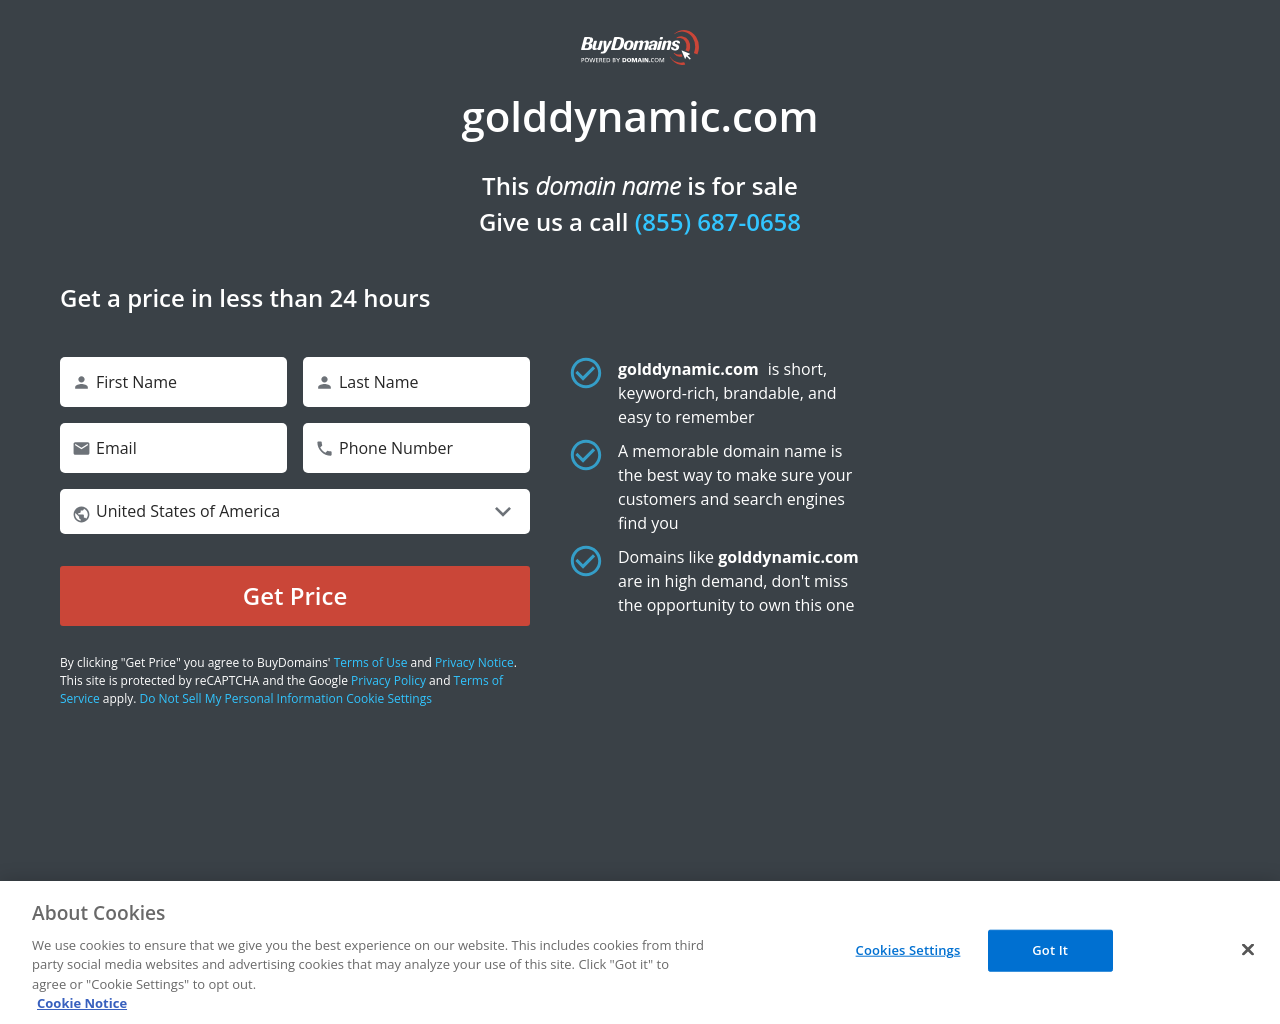 golddynamic.com